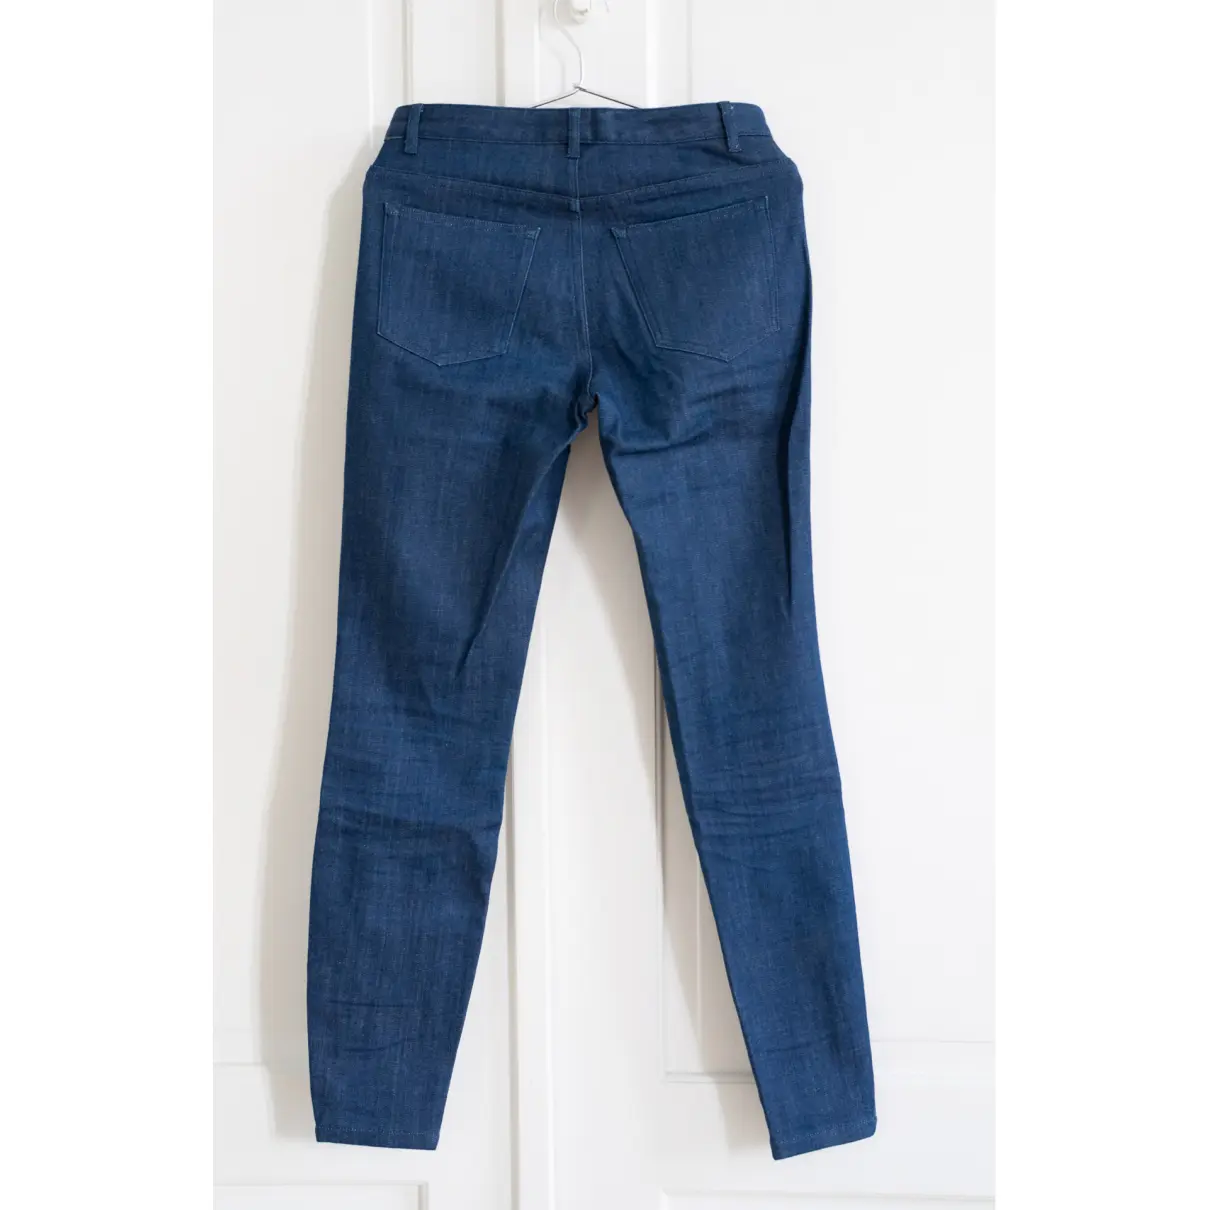 Buy APC Jean moulant slim jeans online